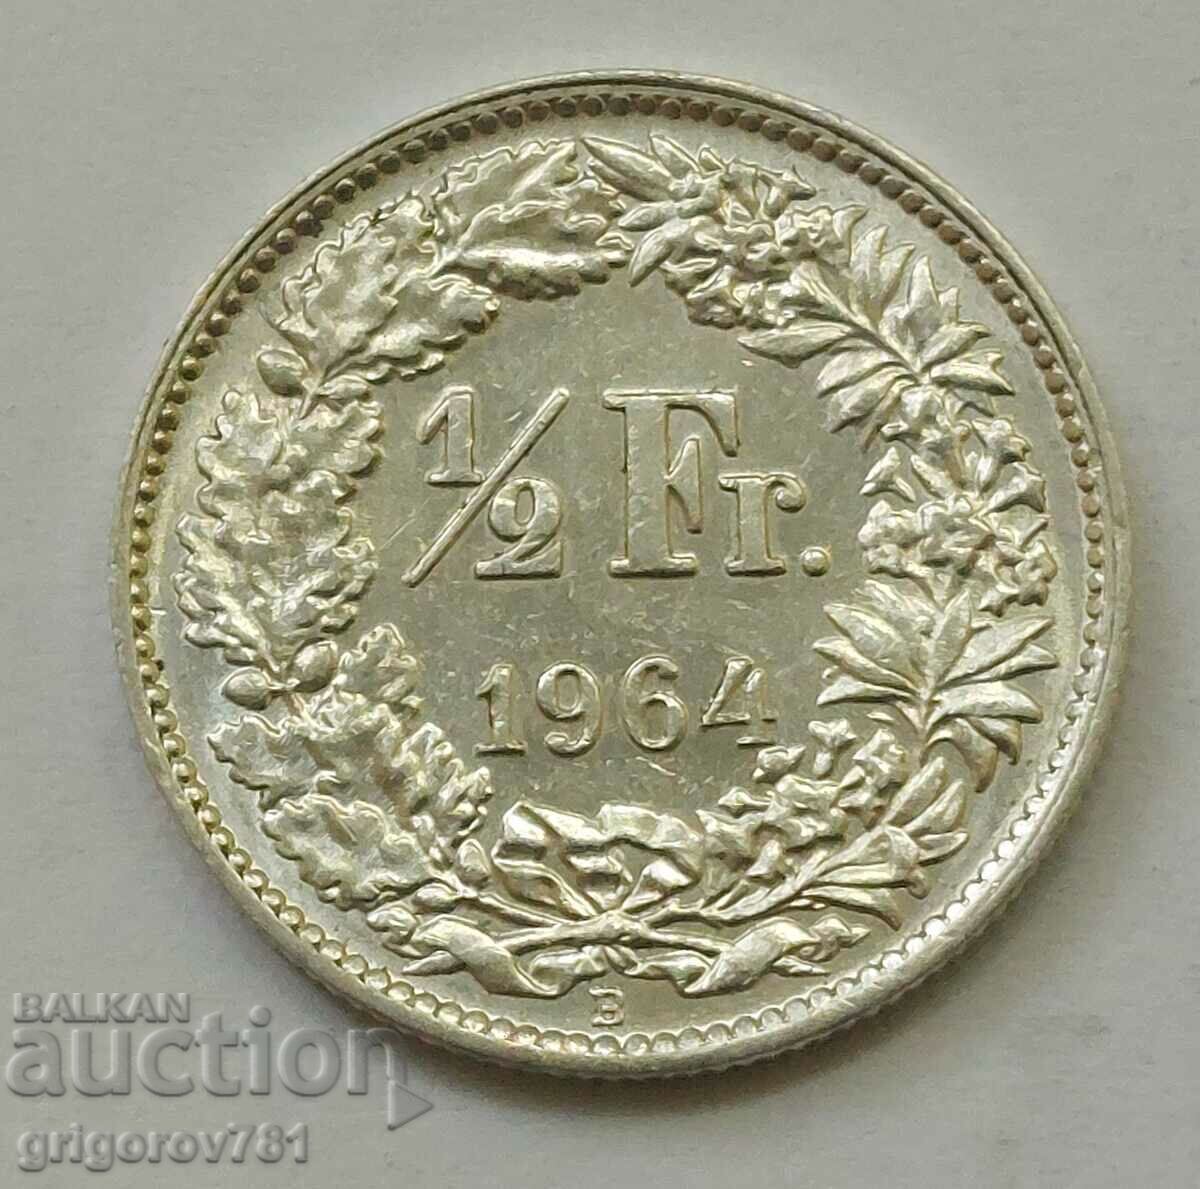 1/2 Franc Silver Switzerland 1964 B - Silver Coin #147